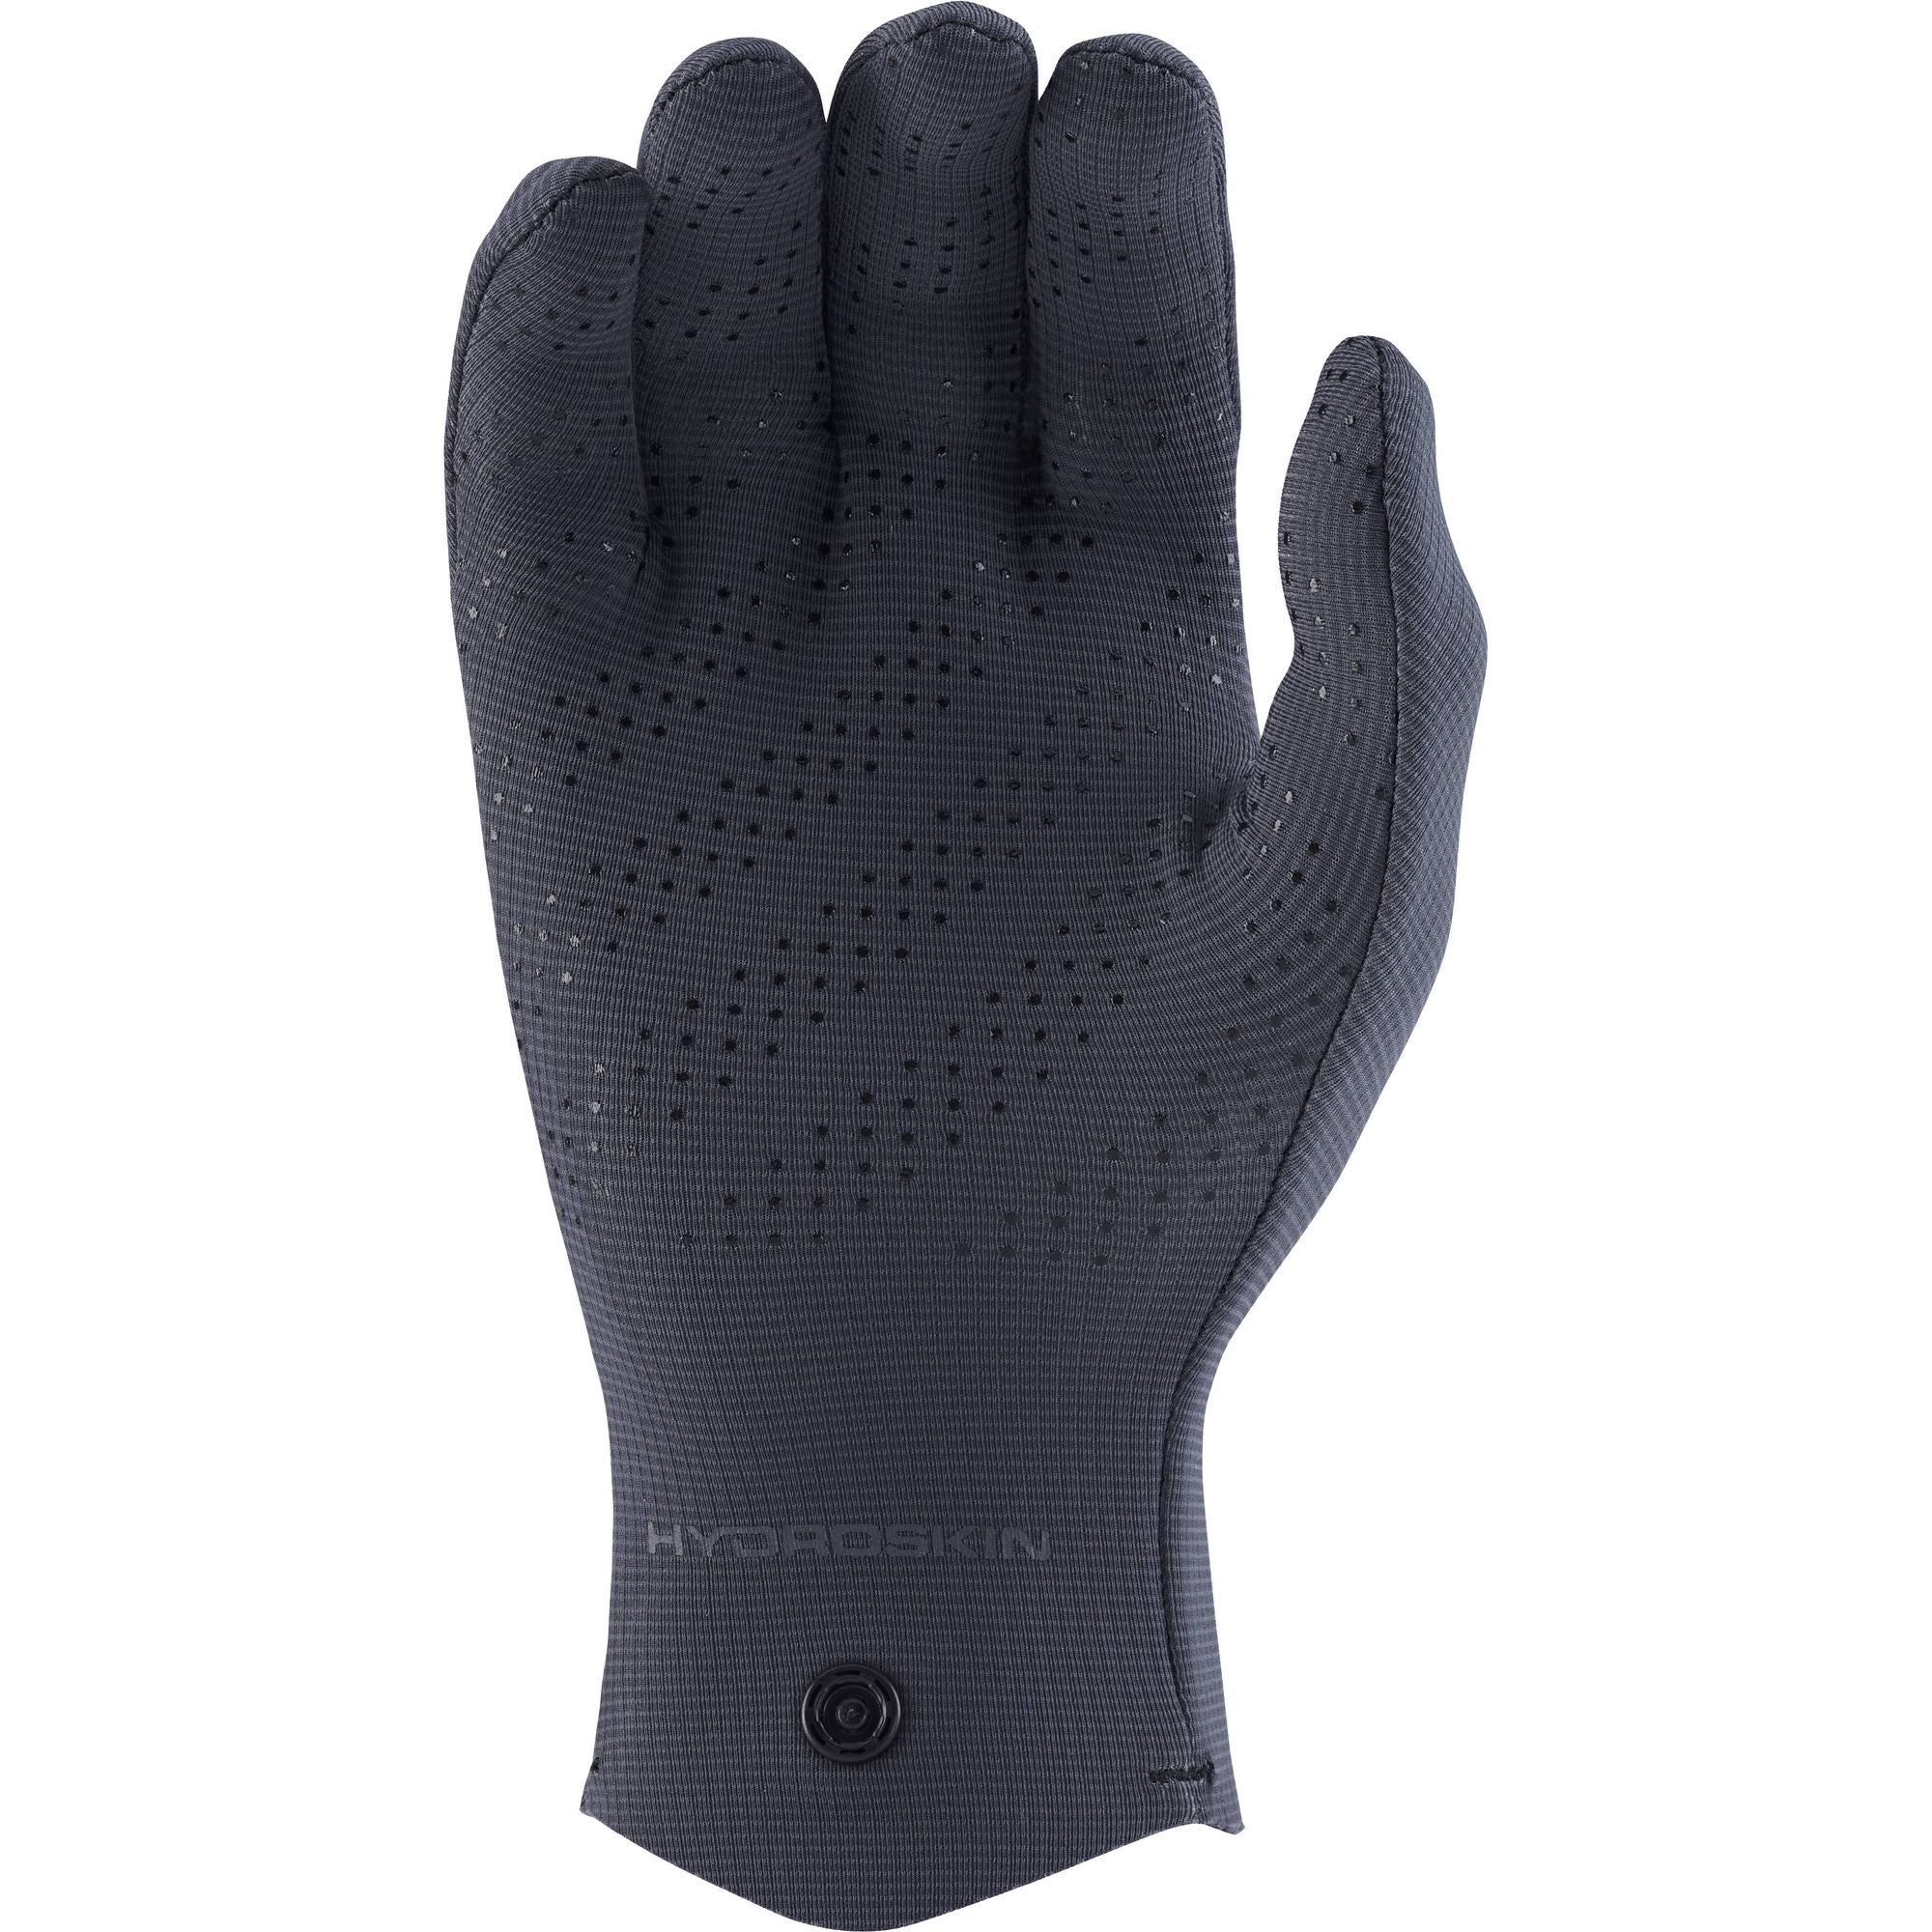 NRS Women's HydroSkin Glove